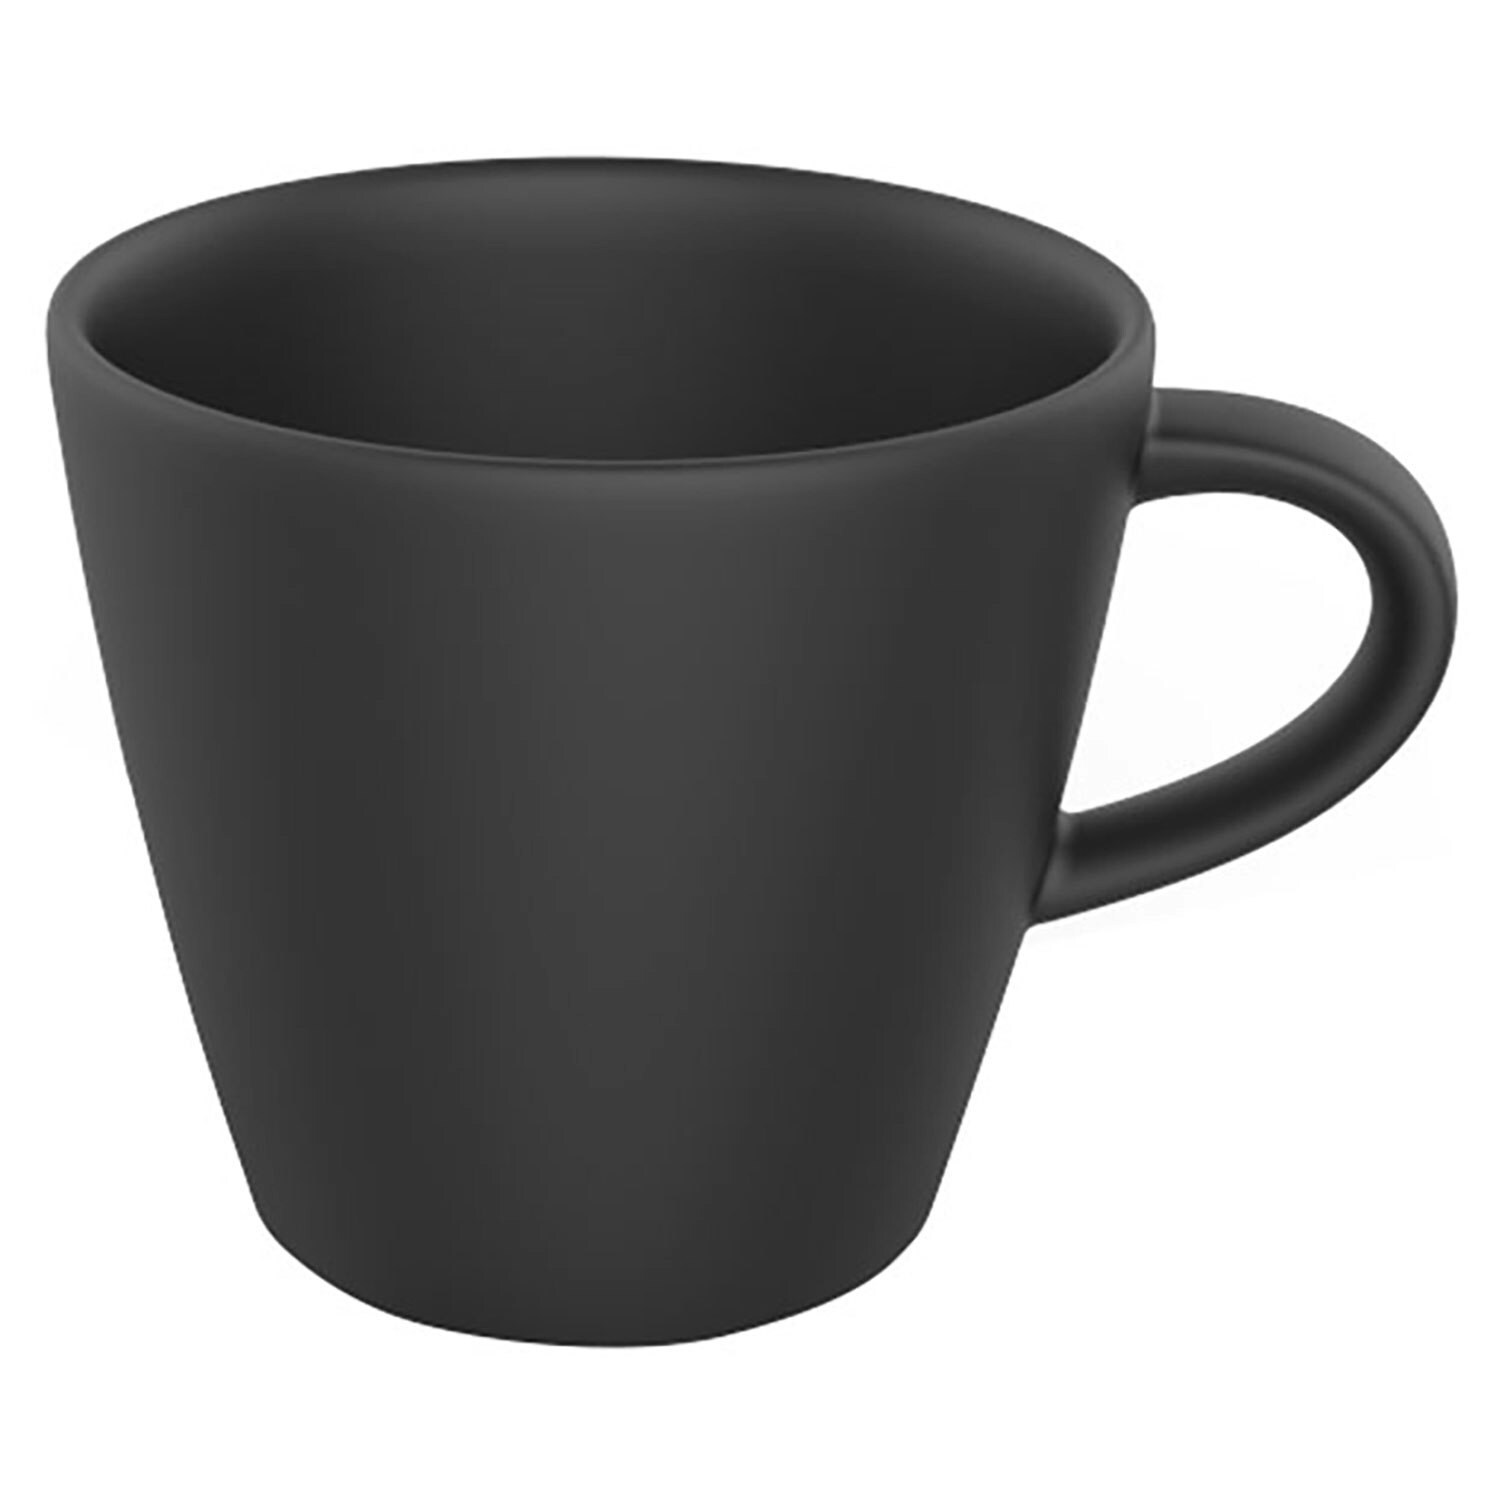 https://royaldesign.com/image/2/villeroy-boch-manufacture-rock-espresso-cup-10-cl-3